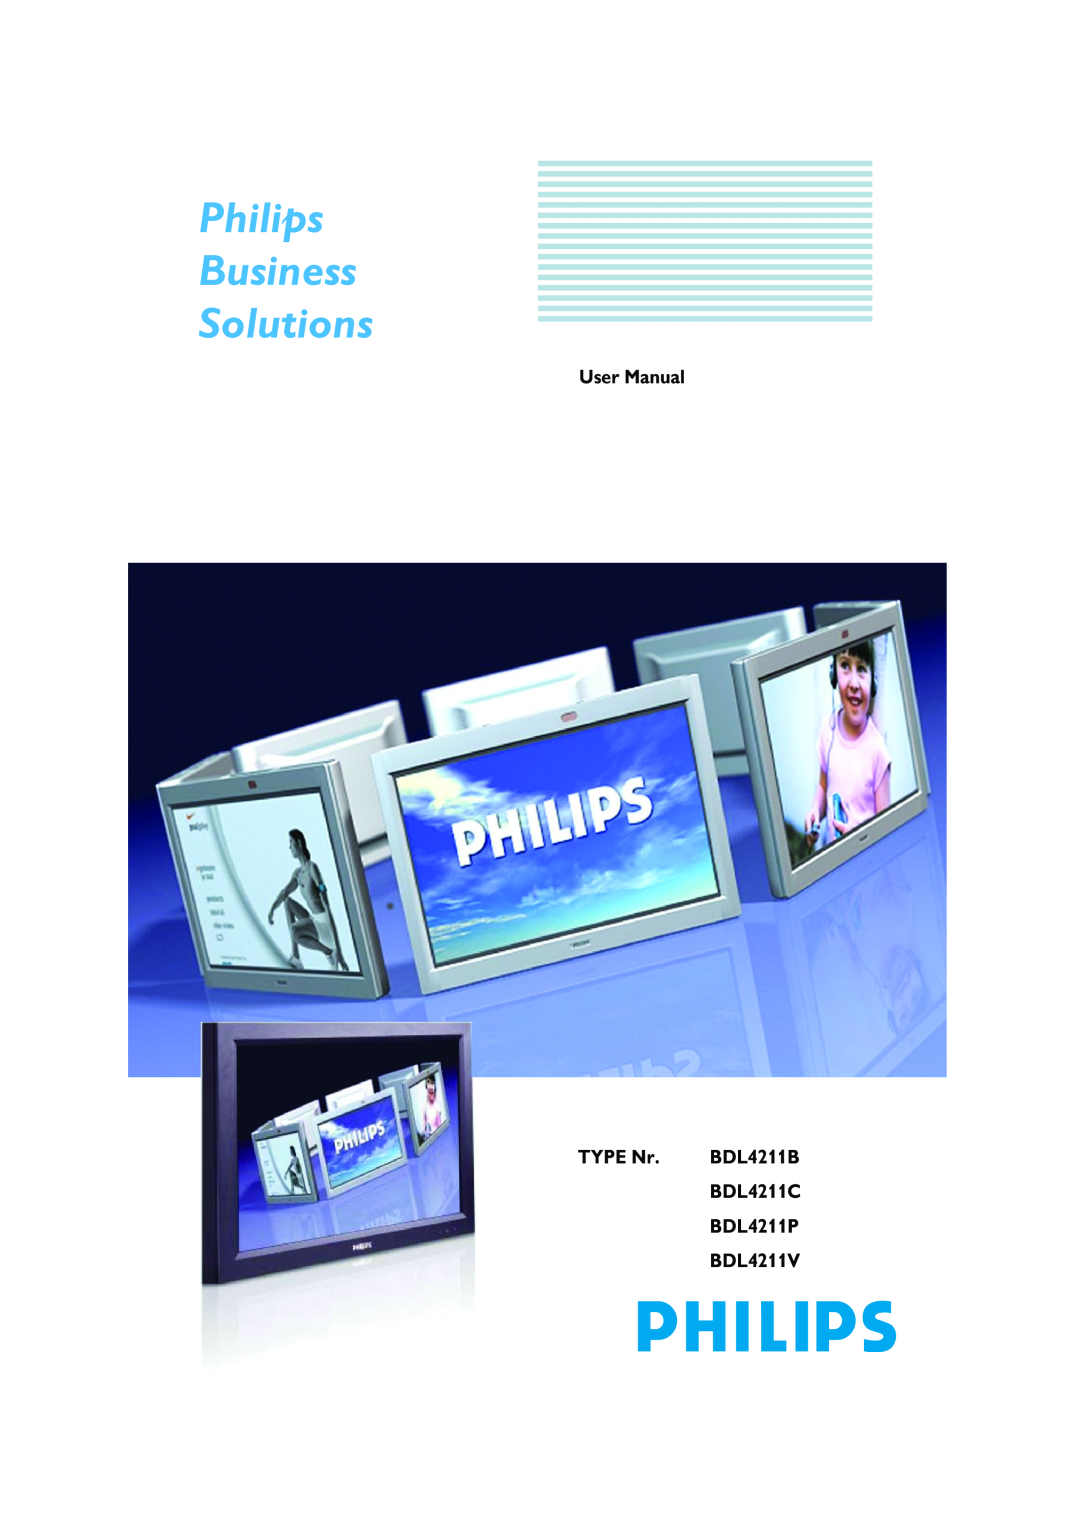 Philips BDL4211C user manual User Manual, TYPE Nr, BDL4211B, BDL4211P, BDL4211V, Philips Business Solutions 